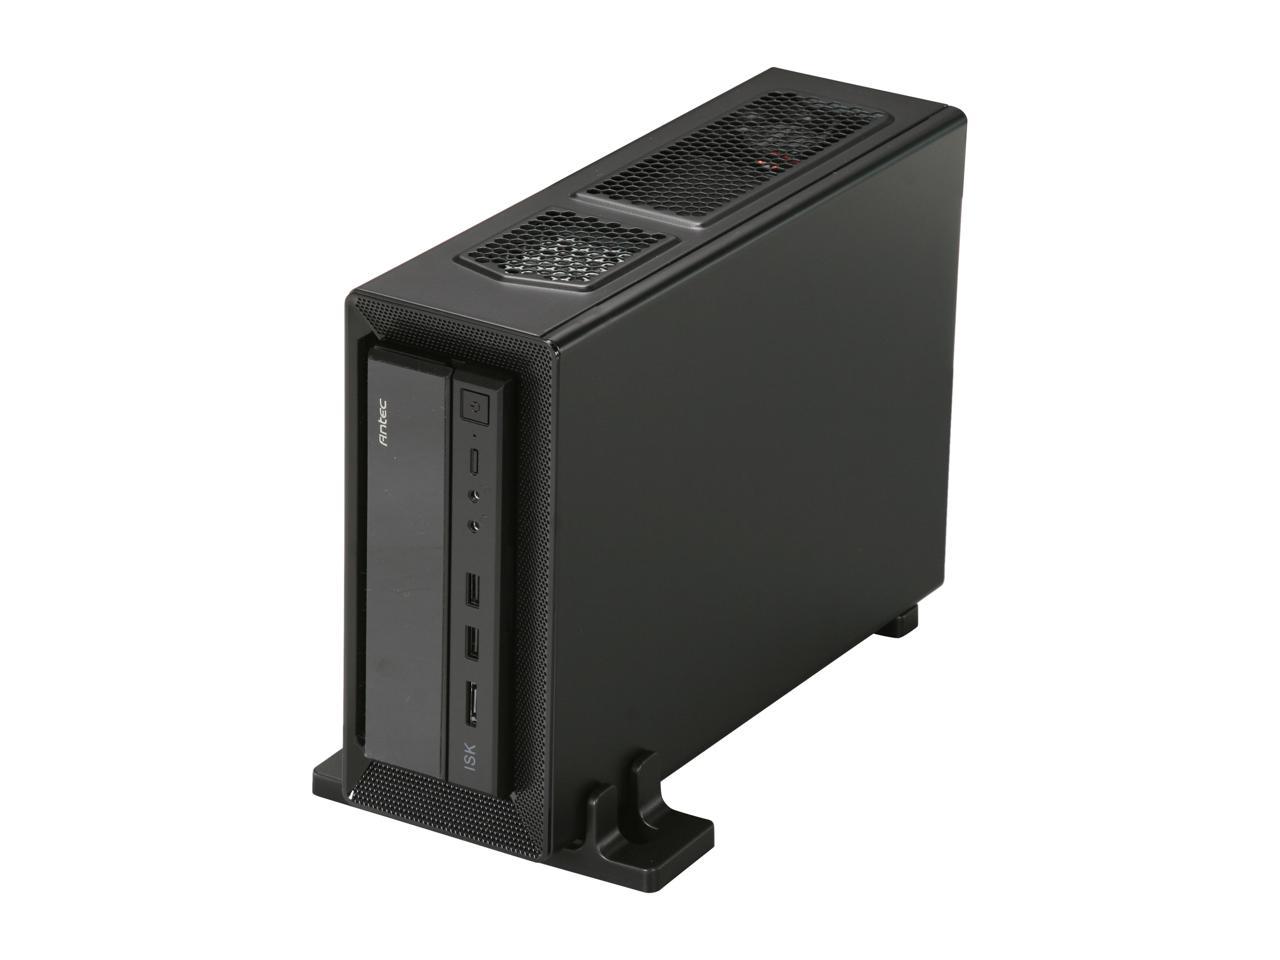 Antec ISK Series ISK 300-150 Black 0.8mm cold rolled steel Mini-ITX Desktop Computer Case 150W Power Supply